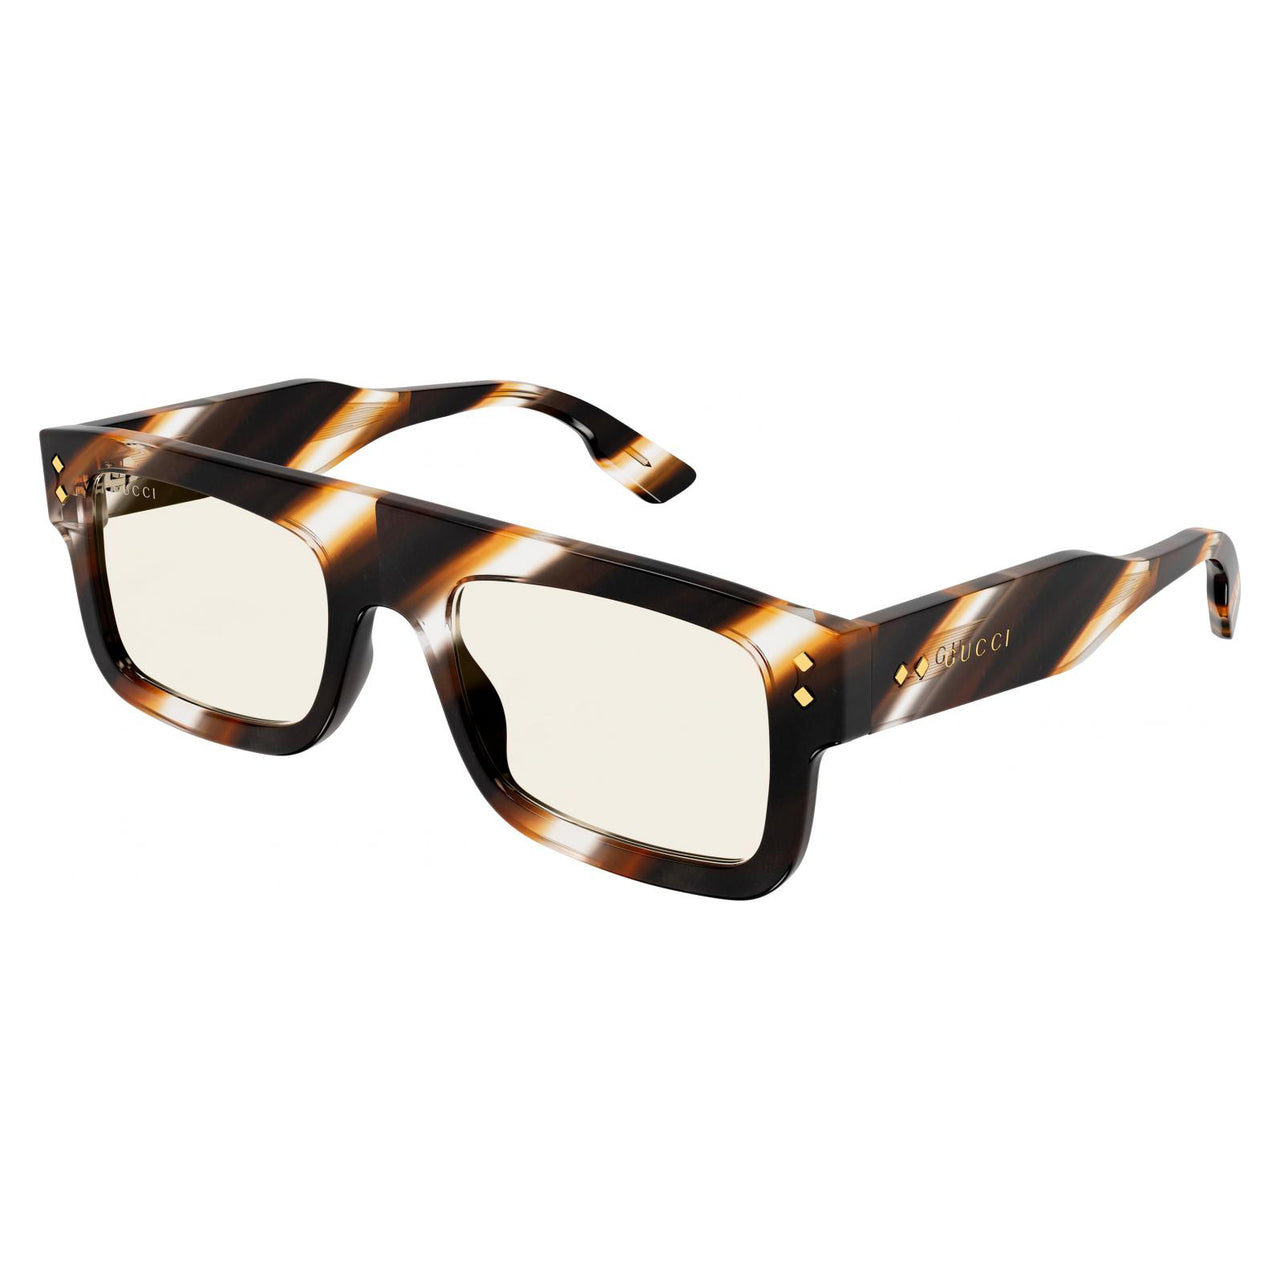 Gucci Men's Sunglasses Rectangle Tortoise GG1085S-002 53